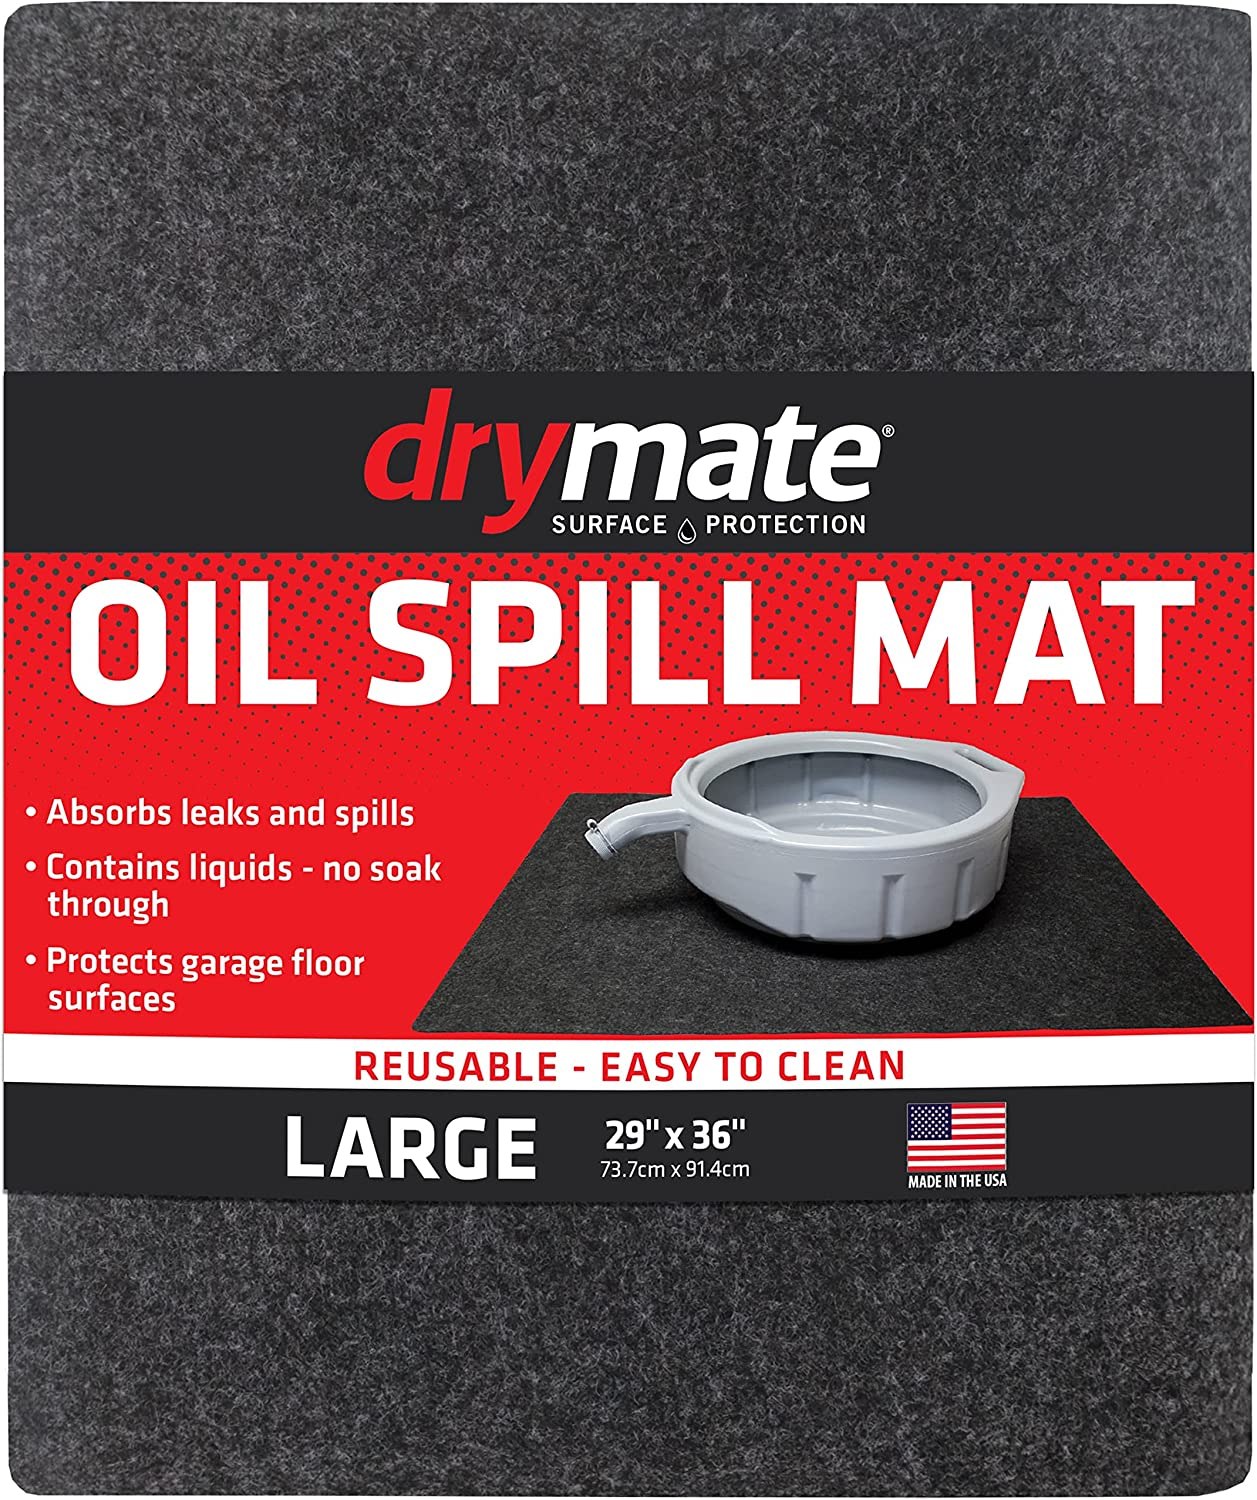 https://cdn.bestreviews.com/images/v4desktop/product-matrix/drymate-oil-spill-mat.jpg